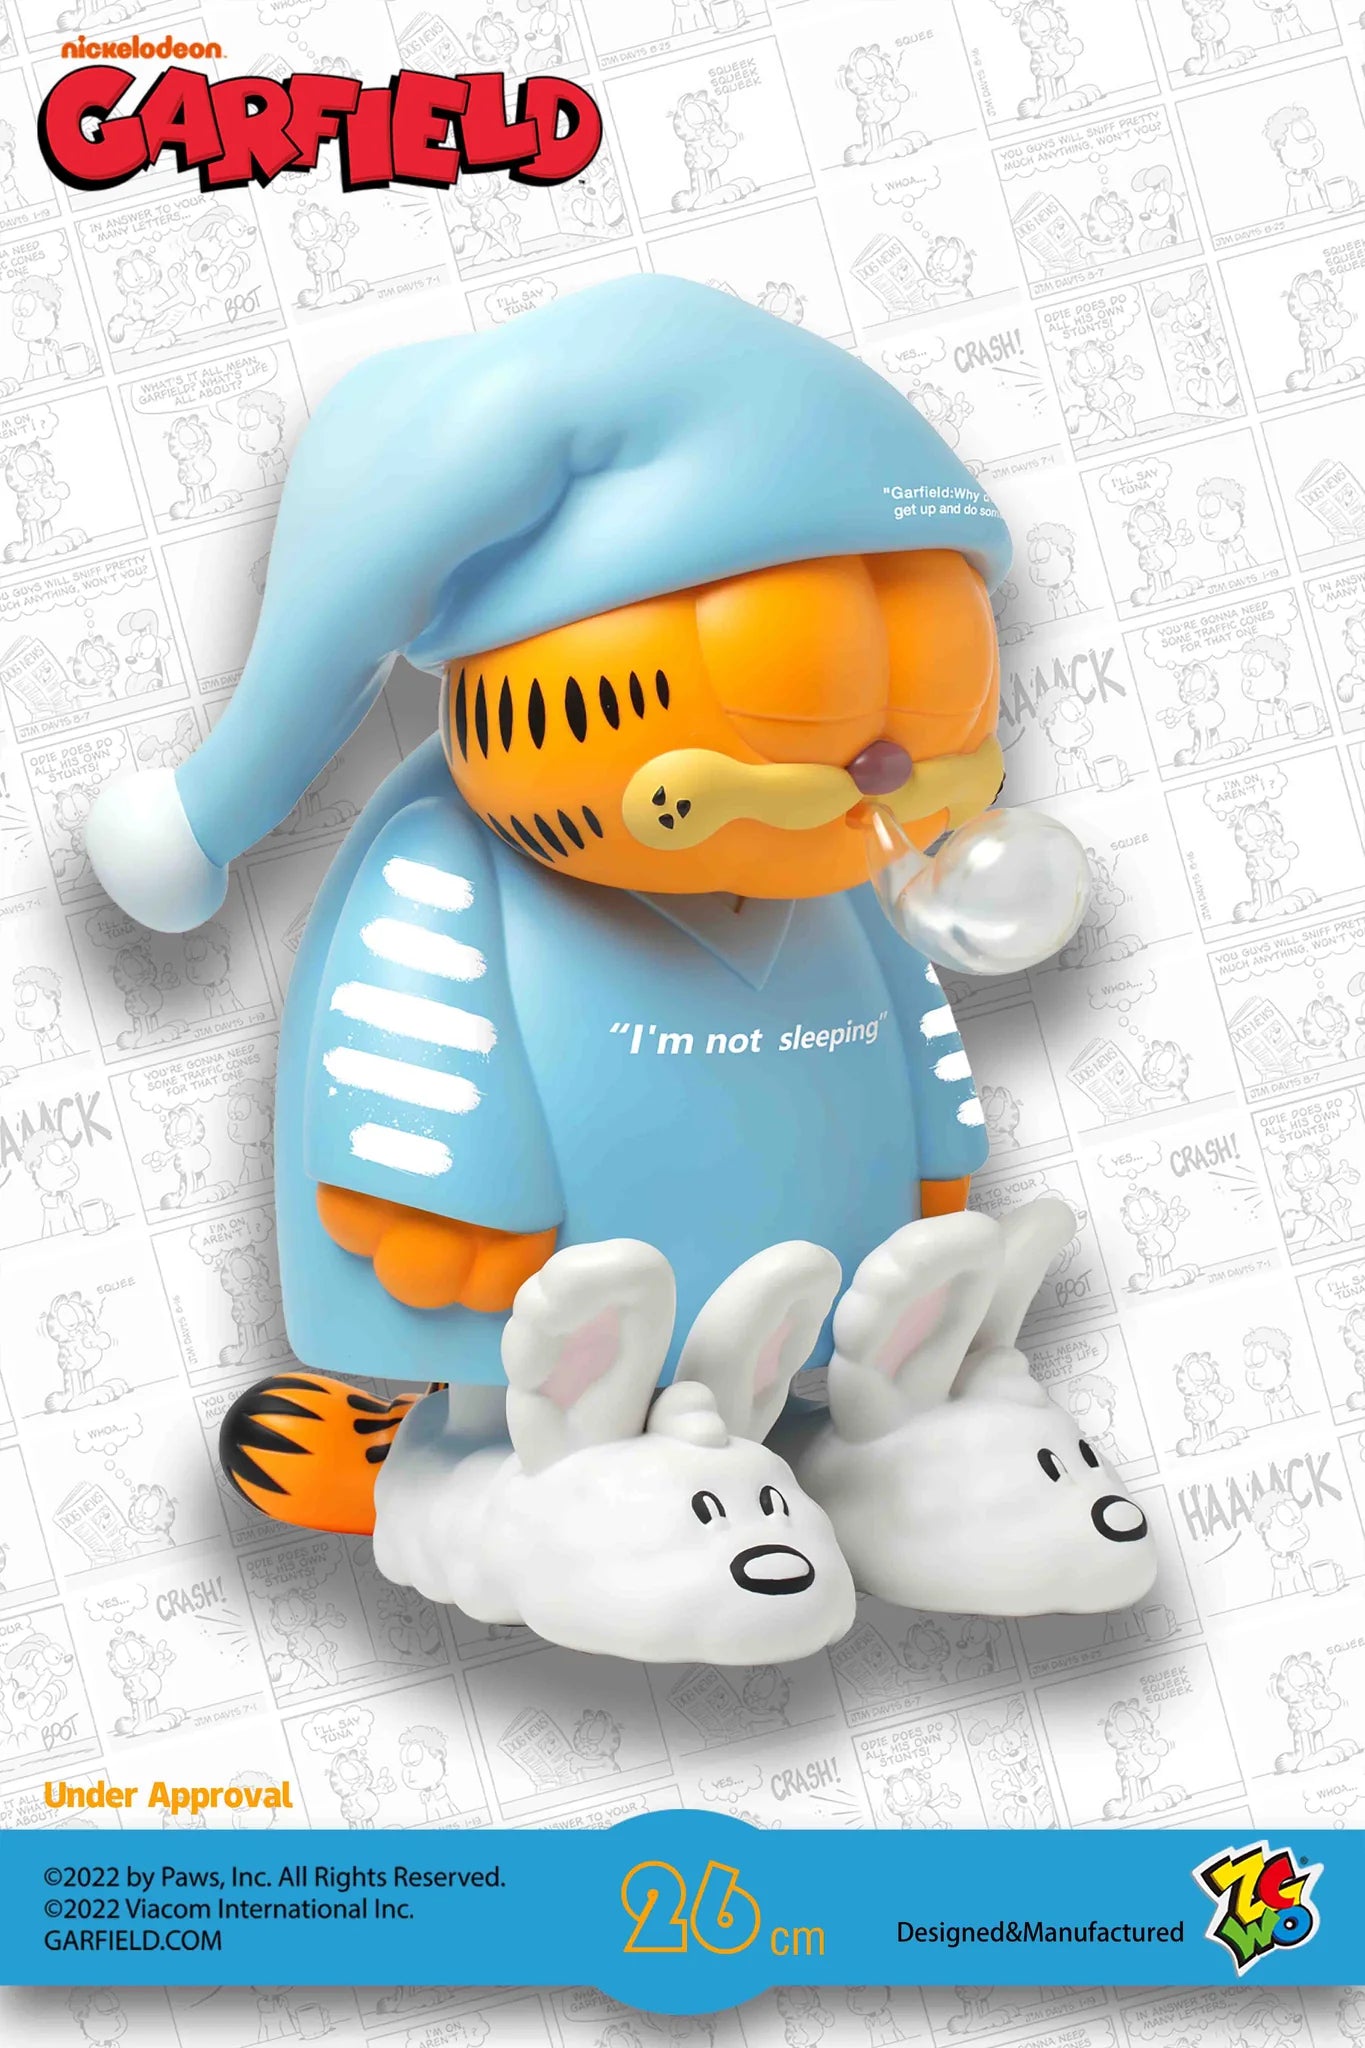 Garfield - "Je ne dors pas" version somnambule 26 cm de Garfield (version bleue)